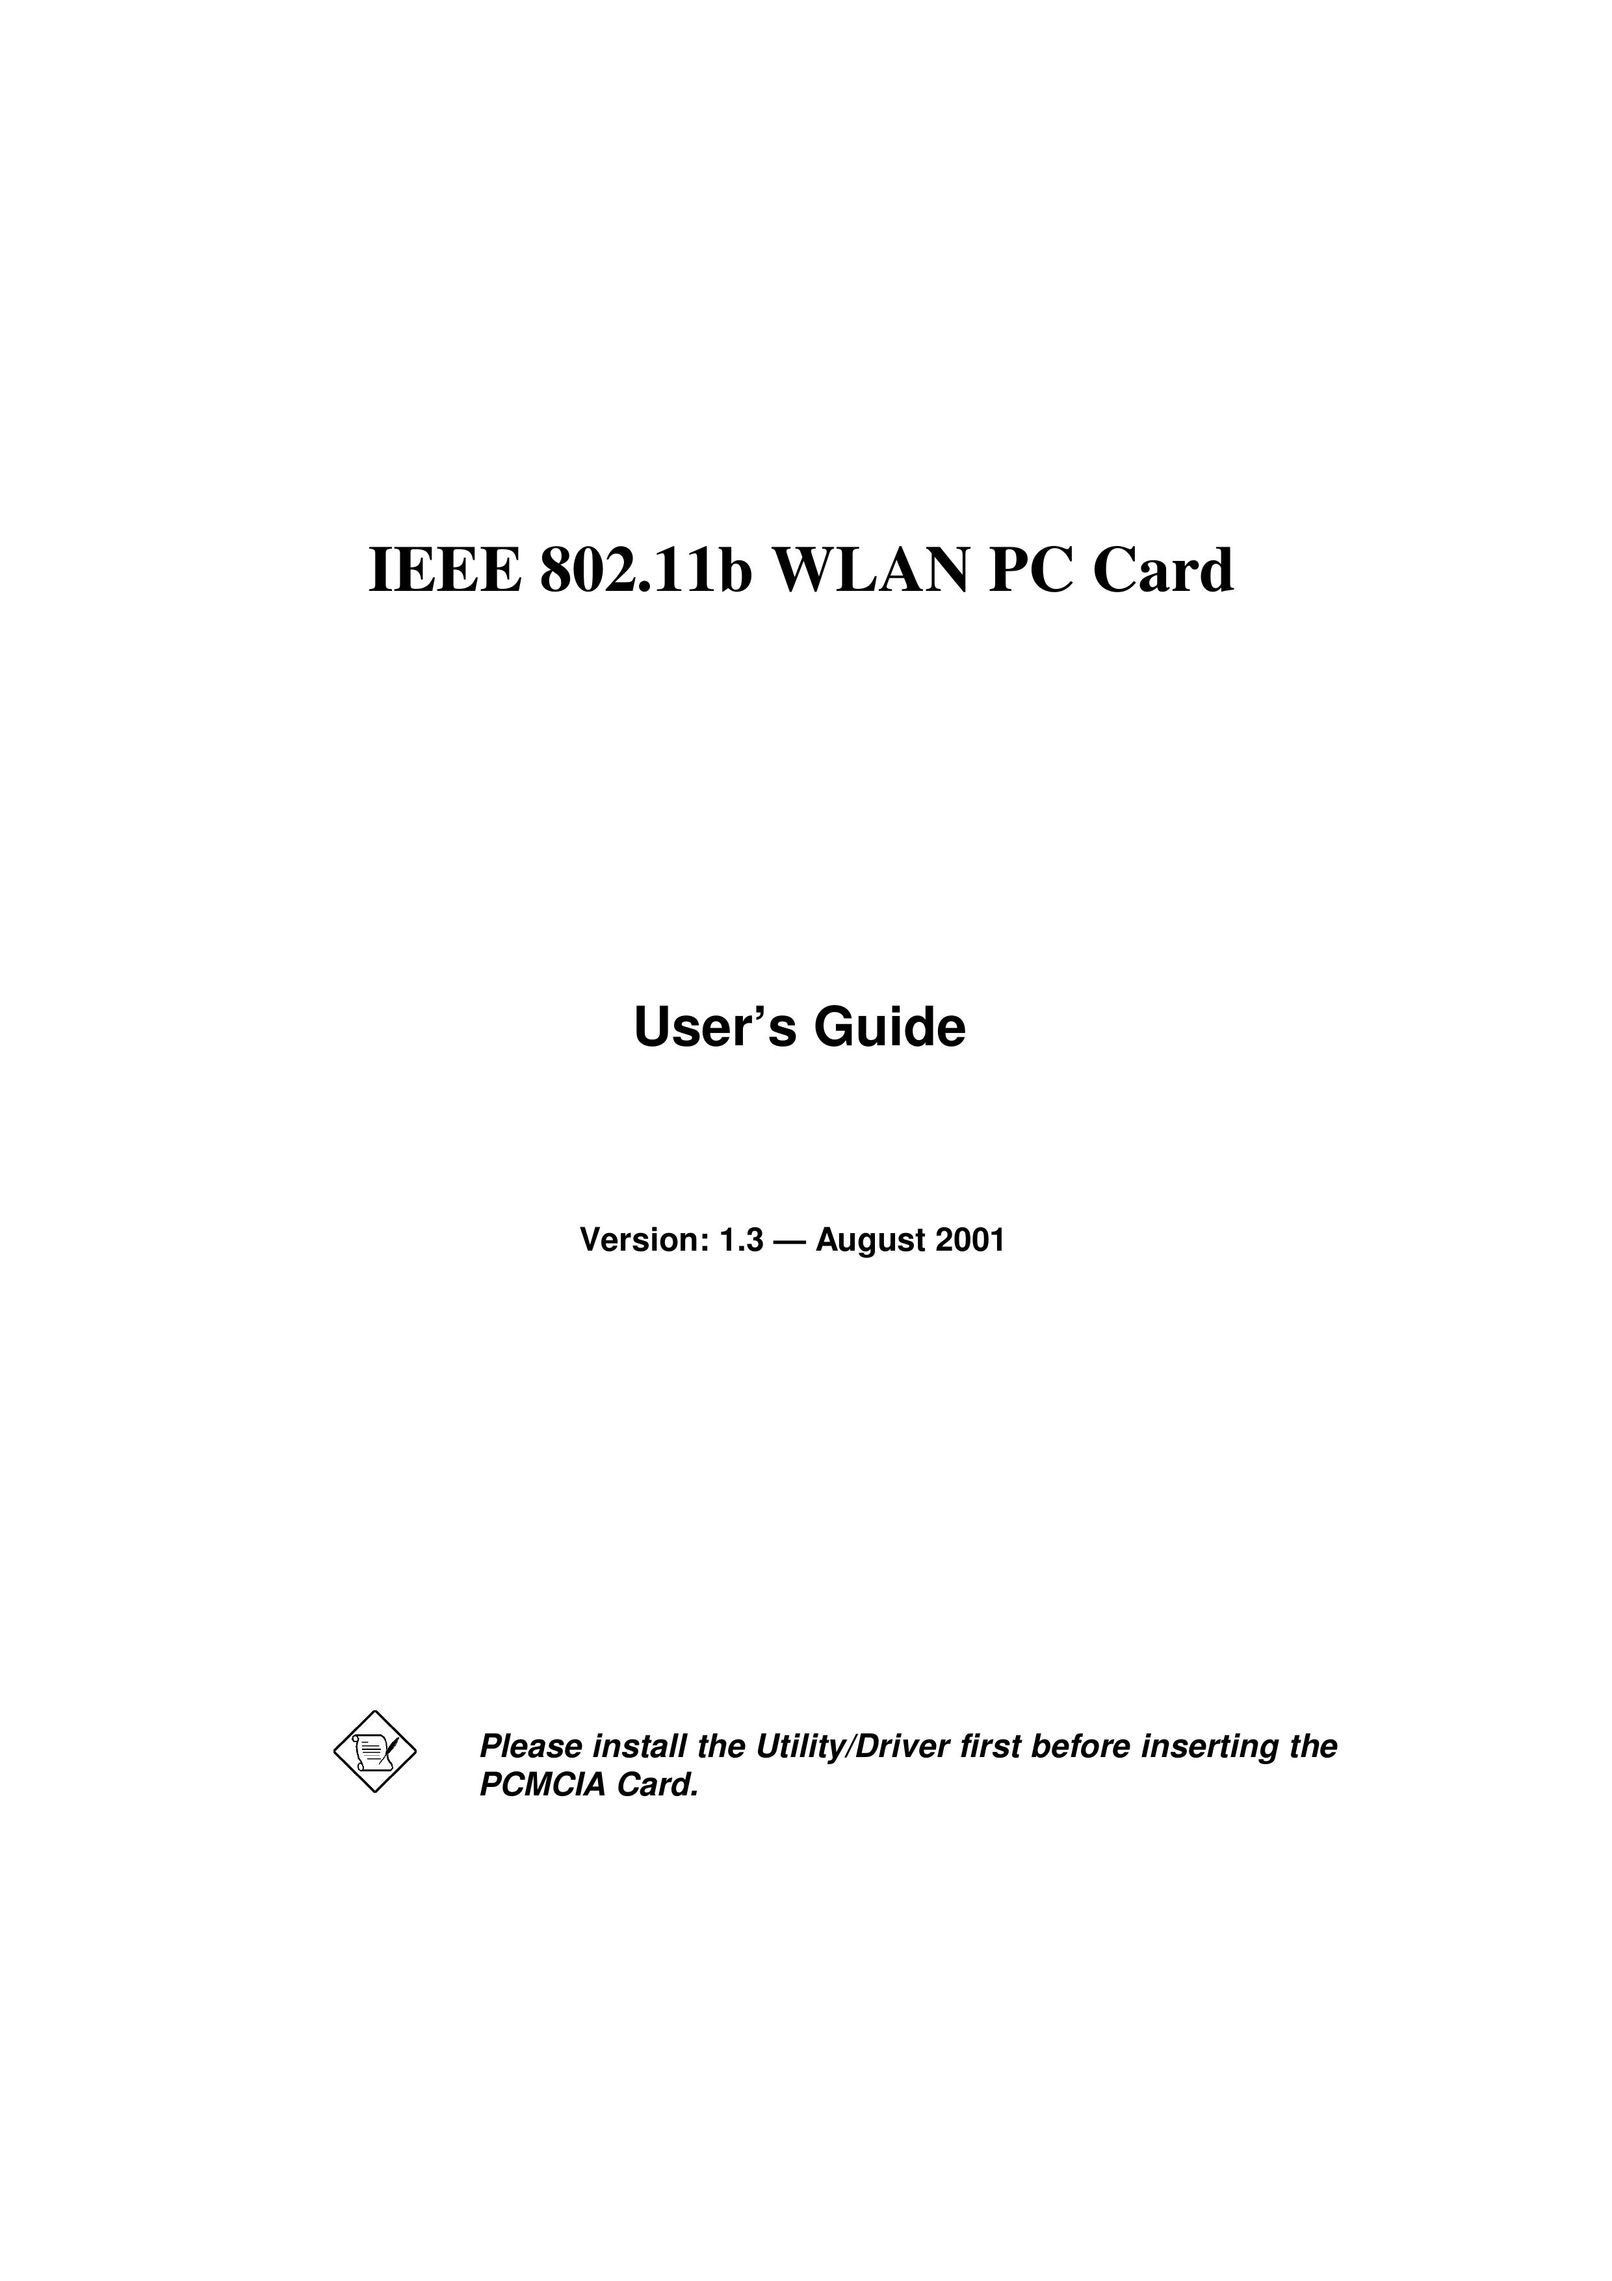 Acer IEEE 802.11b WLAN PC Card Network Card User Manual